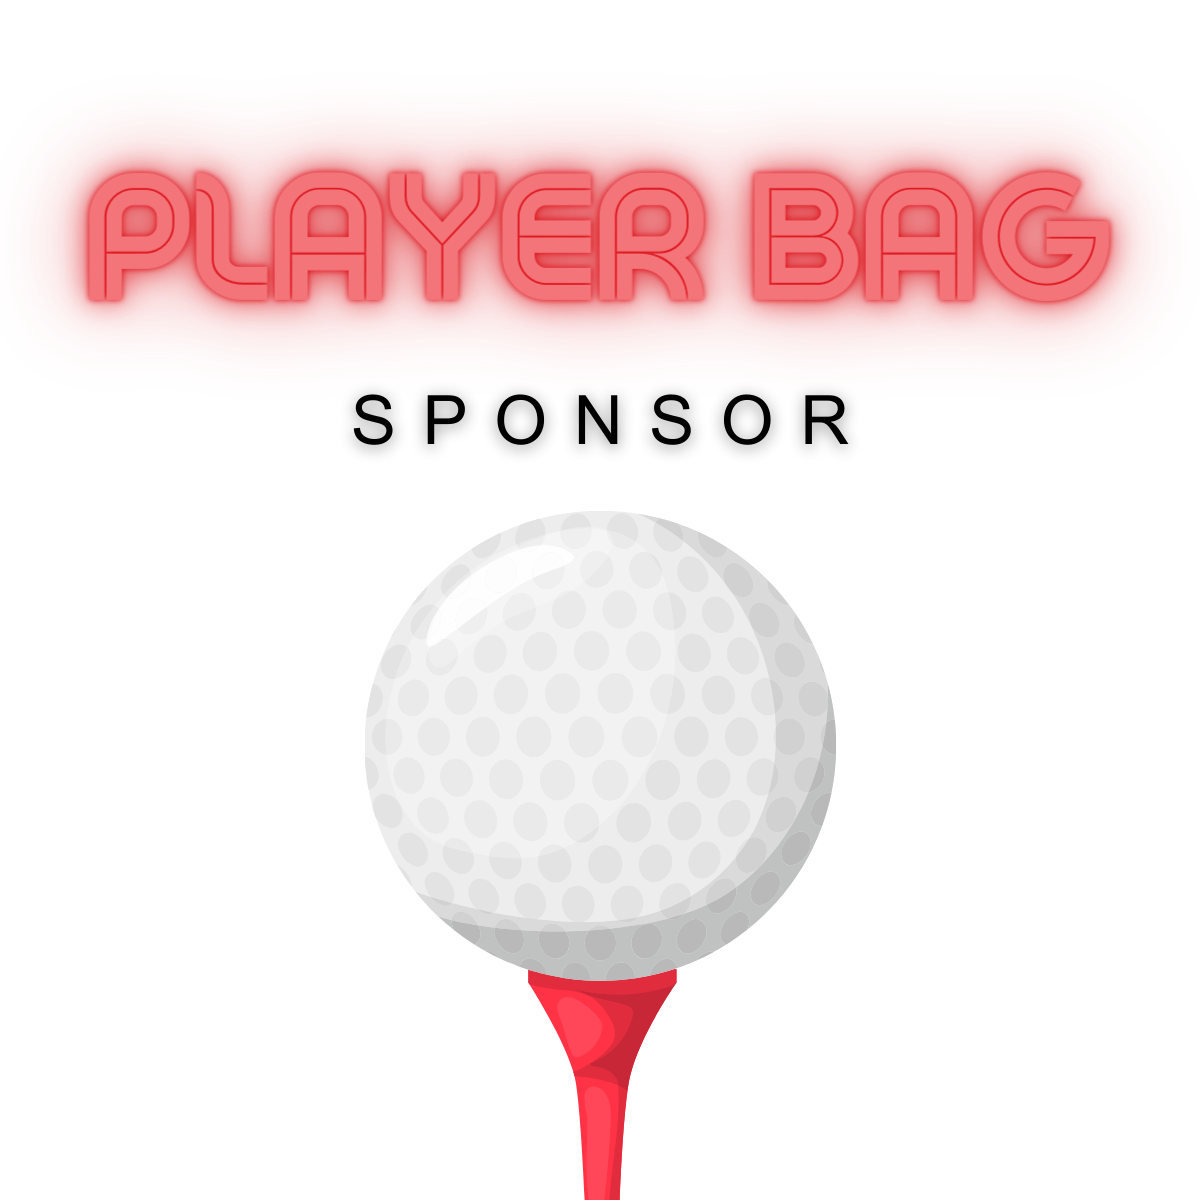 Player Bag Sponsor - Mid-Con Open